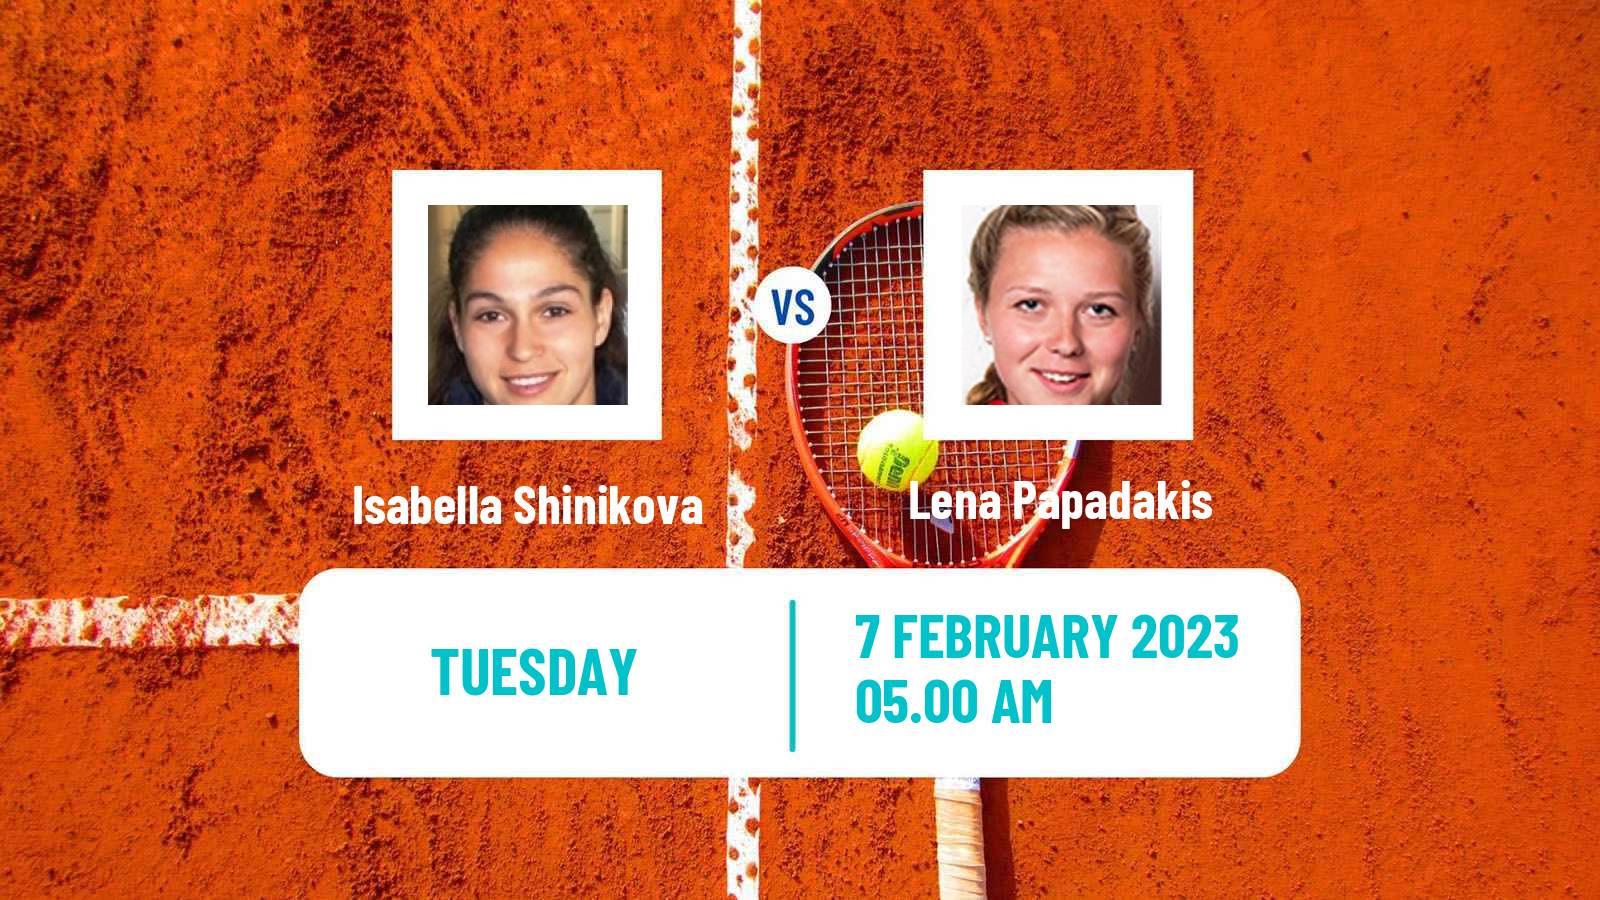 Tennis ITF Tournaments Isabella Shinikova - Lena Papadakis